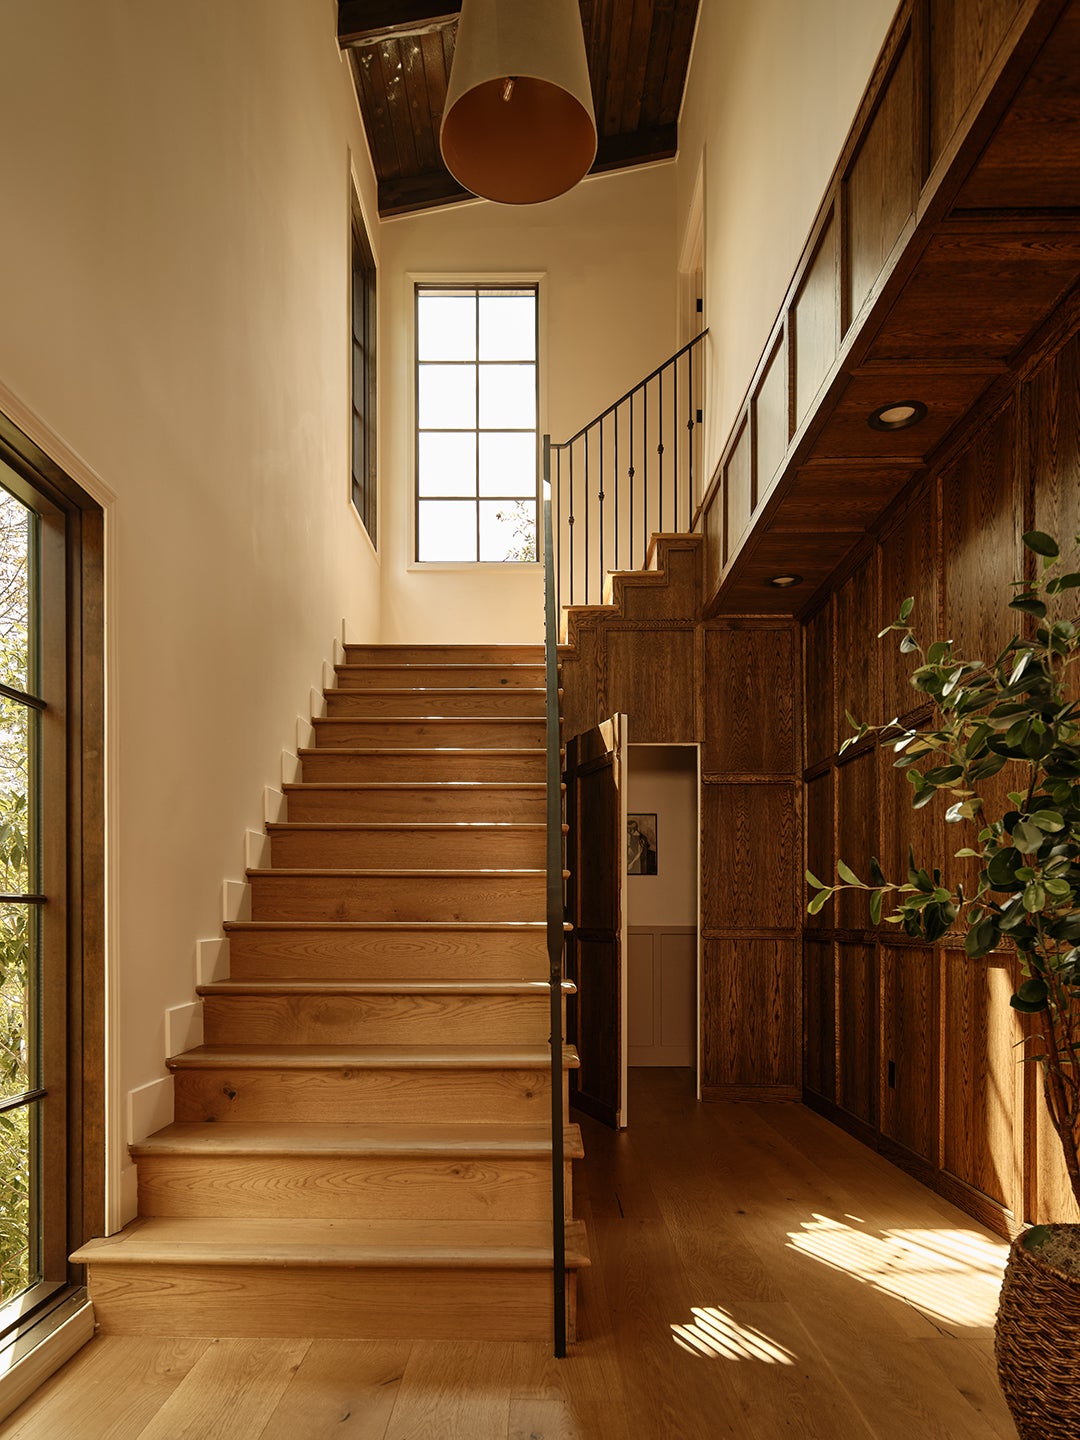 paneled stairs